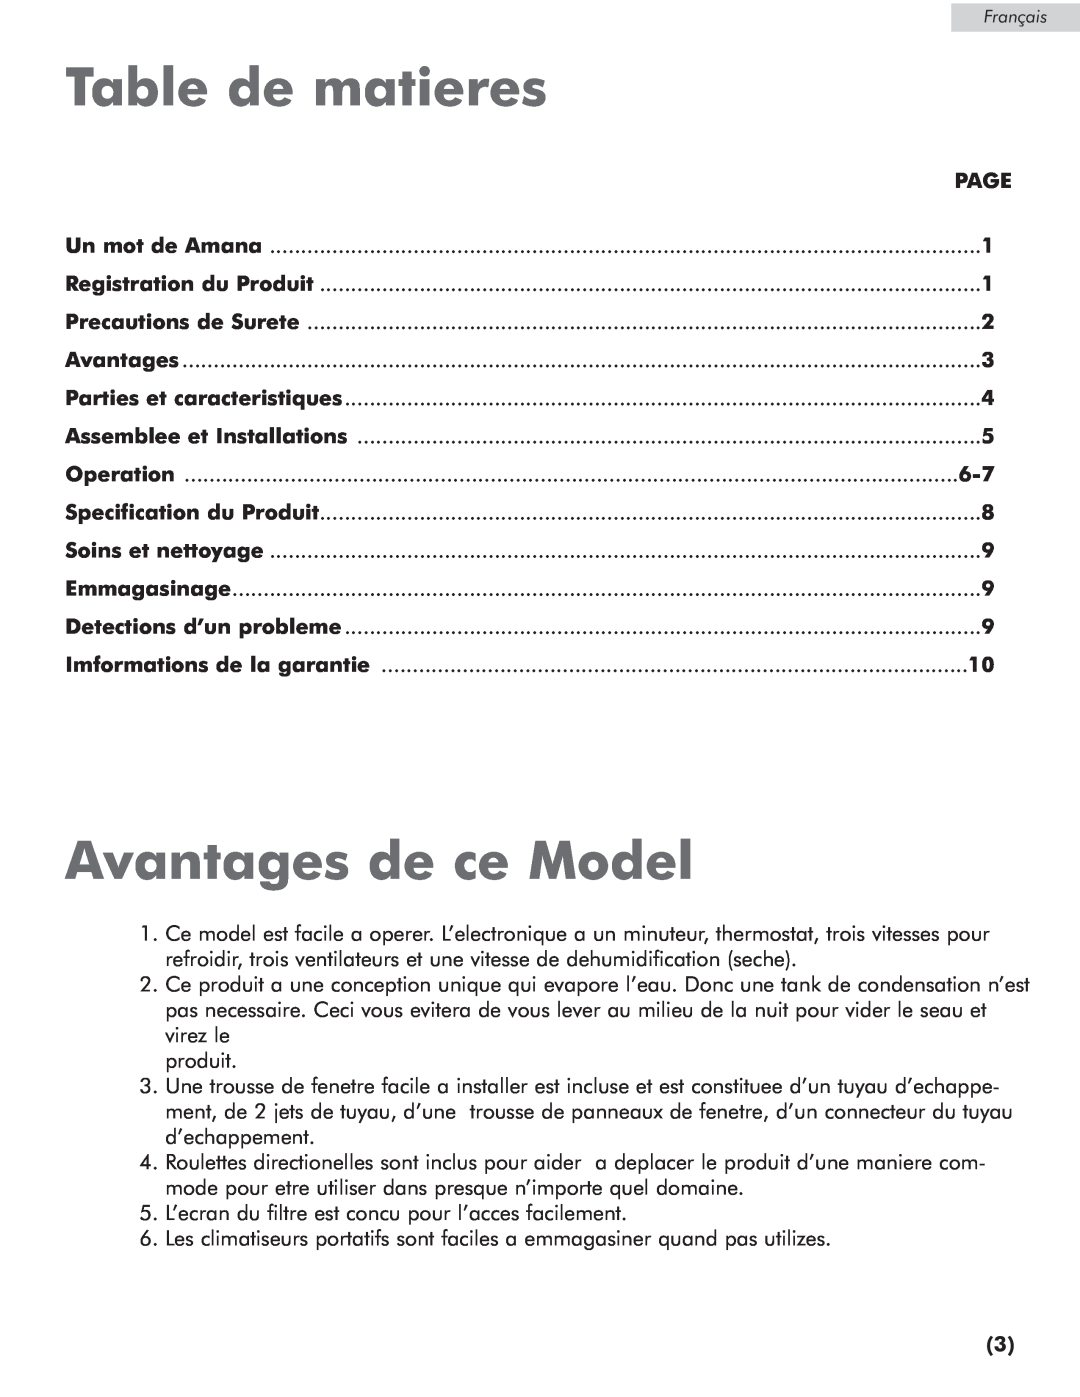 Amana AP076E manual Table de matieres, Avantages de ce Model 